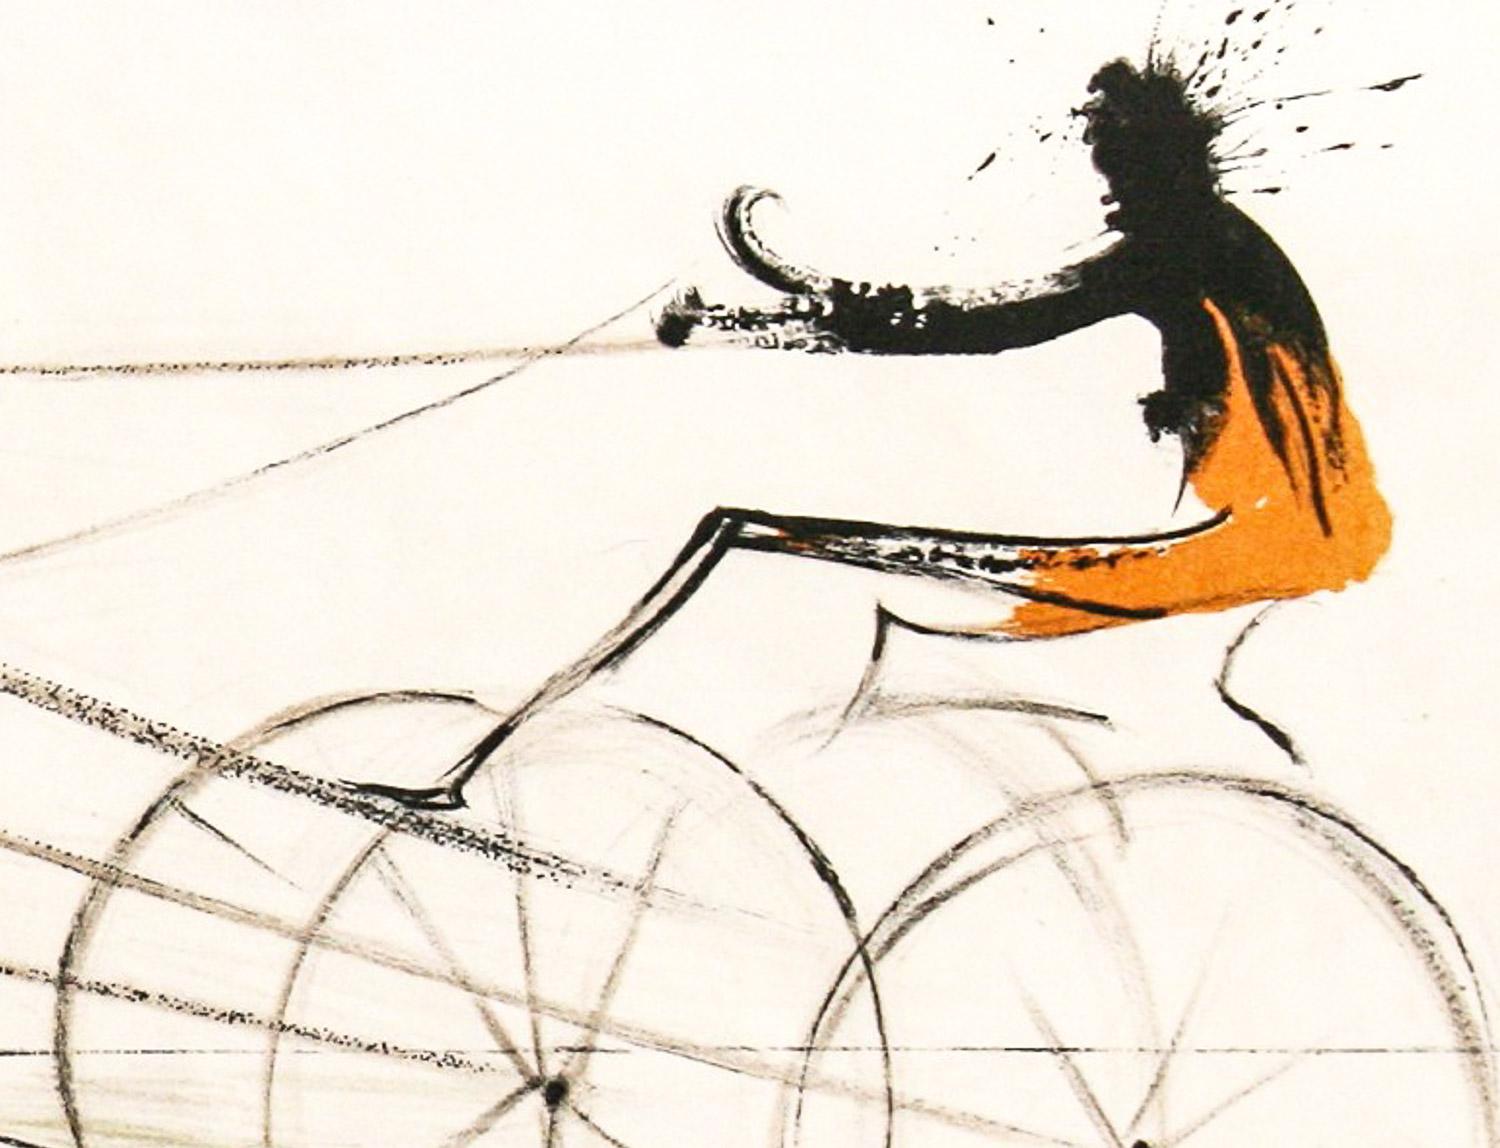 amerikanische Trotting-Pferde Nr. I (Surrealismus), Print, von Salvador Dalí